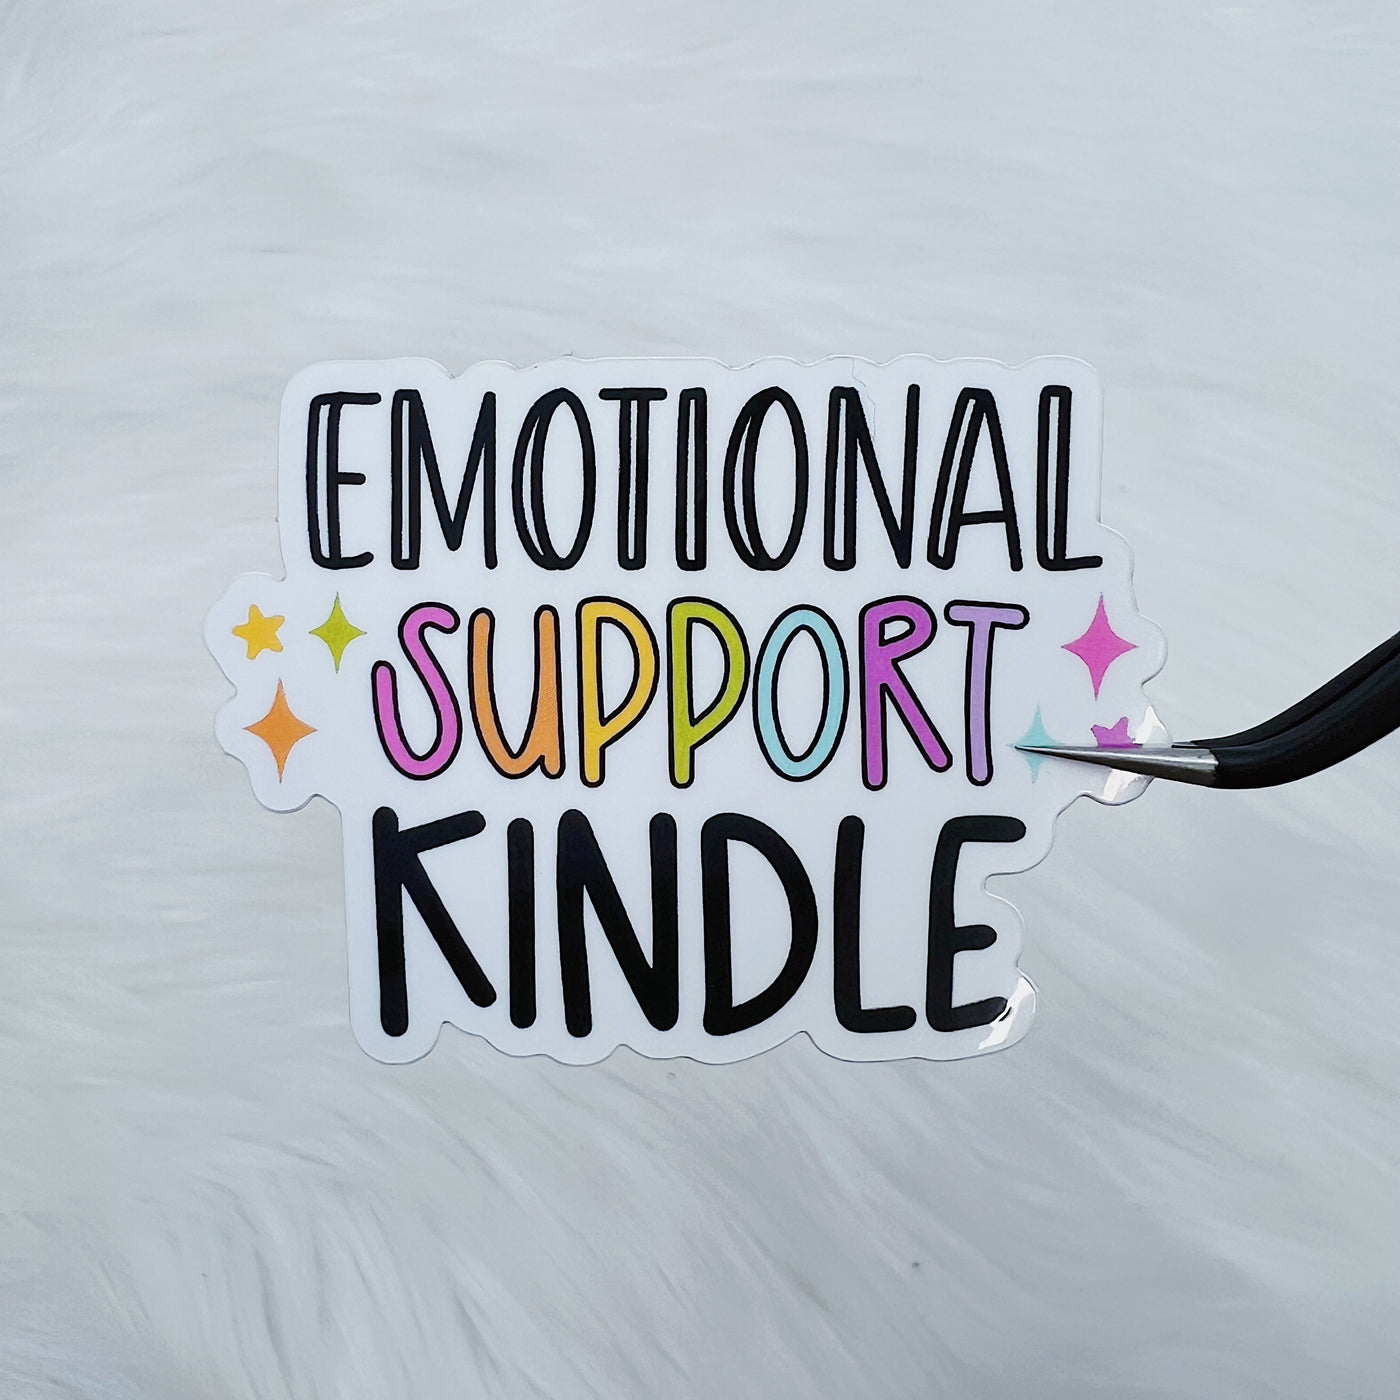 Emotional Support Kindle Vinyl Sticker Die Cut